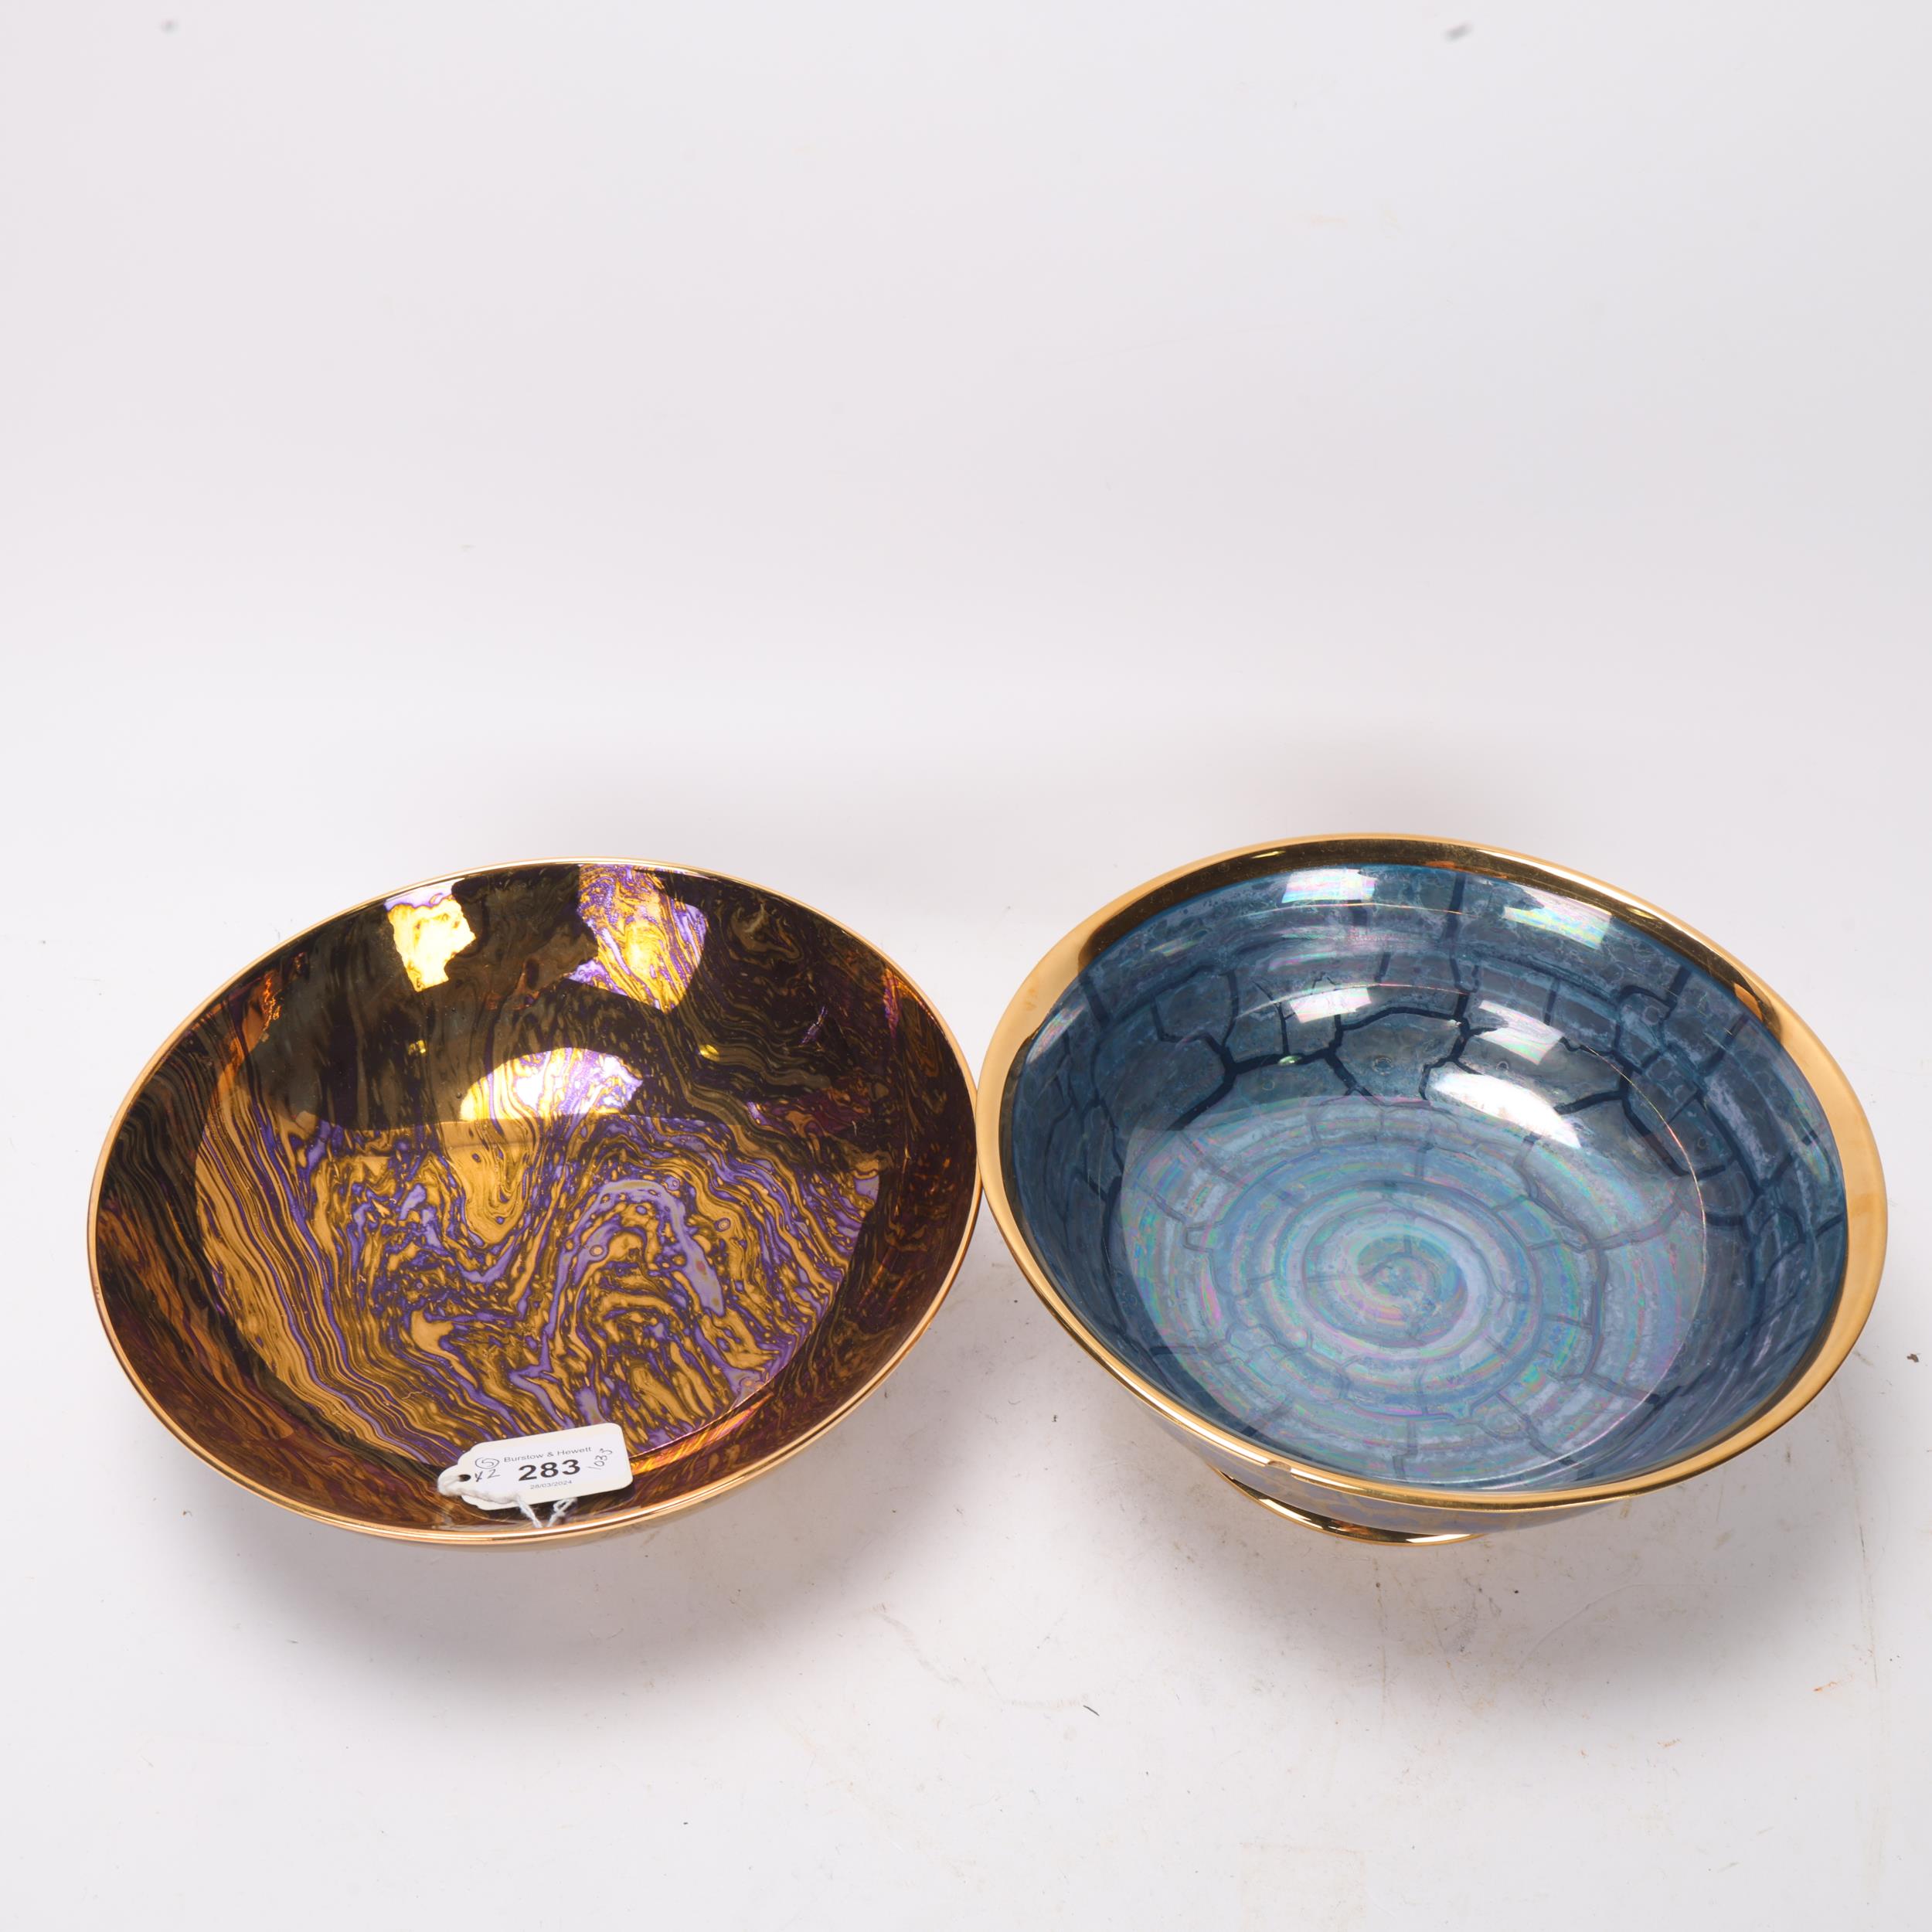 CAROLINE & STEPHEN ATKINSON-JONES, two slip-cast fruit bowls, with gold lustre glaze, signed to - Image 2 of 3